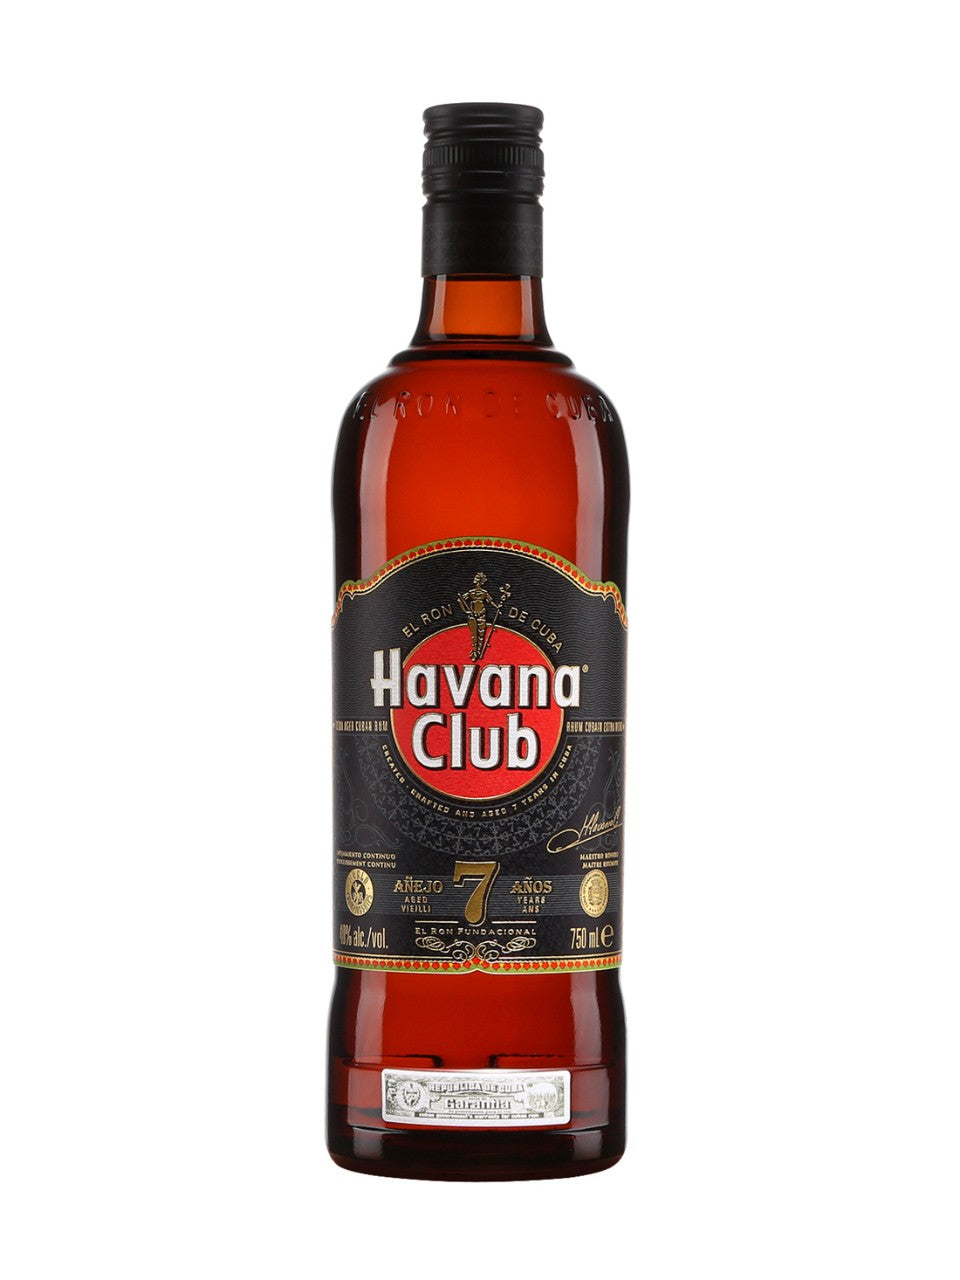 HAVANA CLUB 7 YEAR OLD 750mL